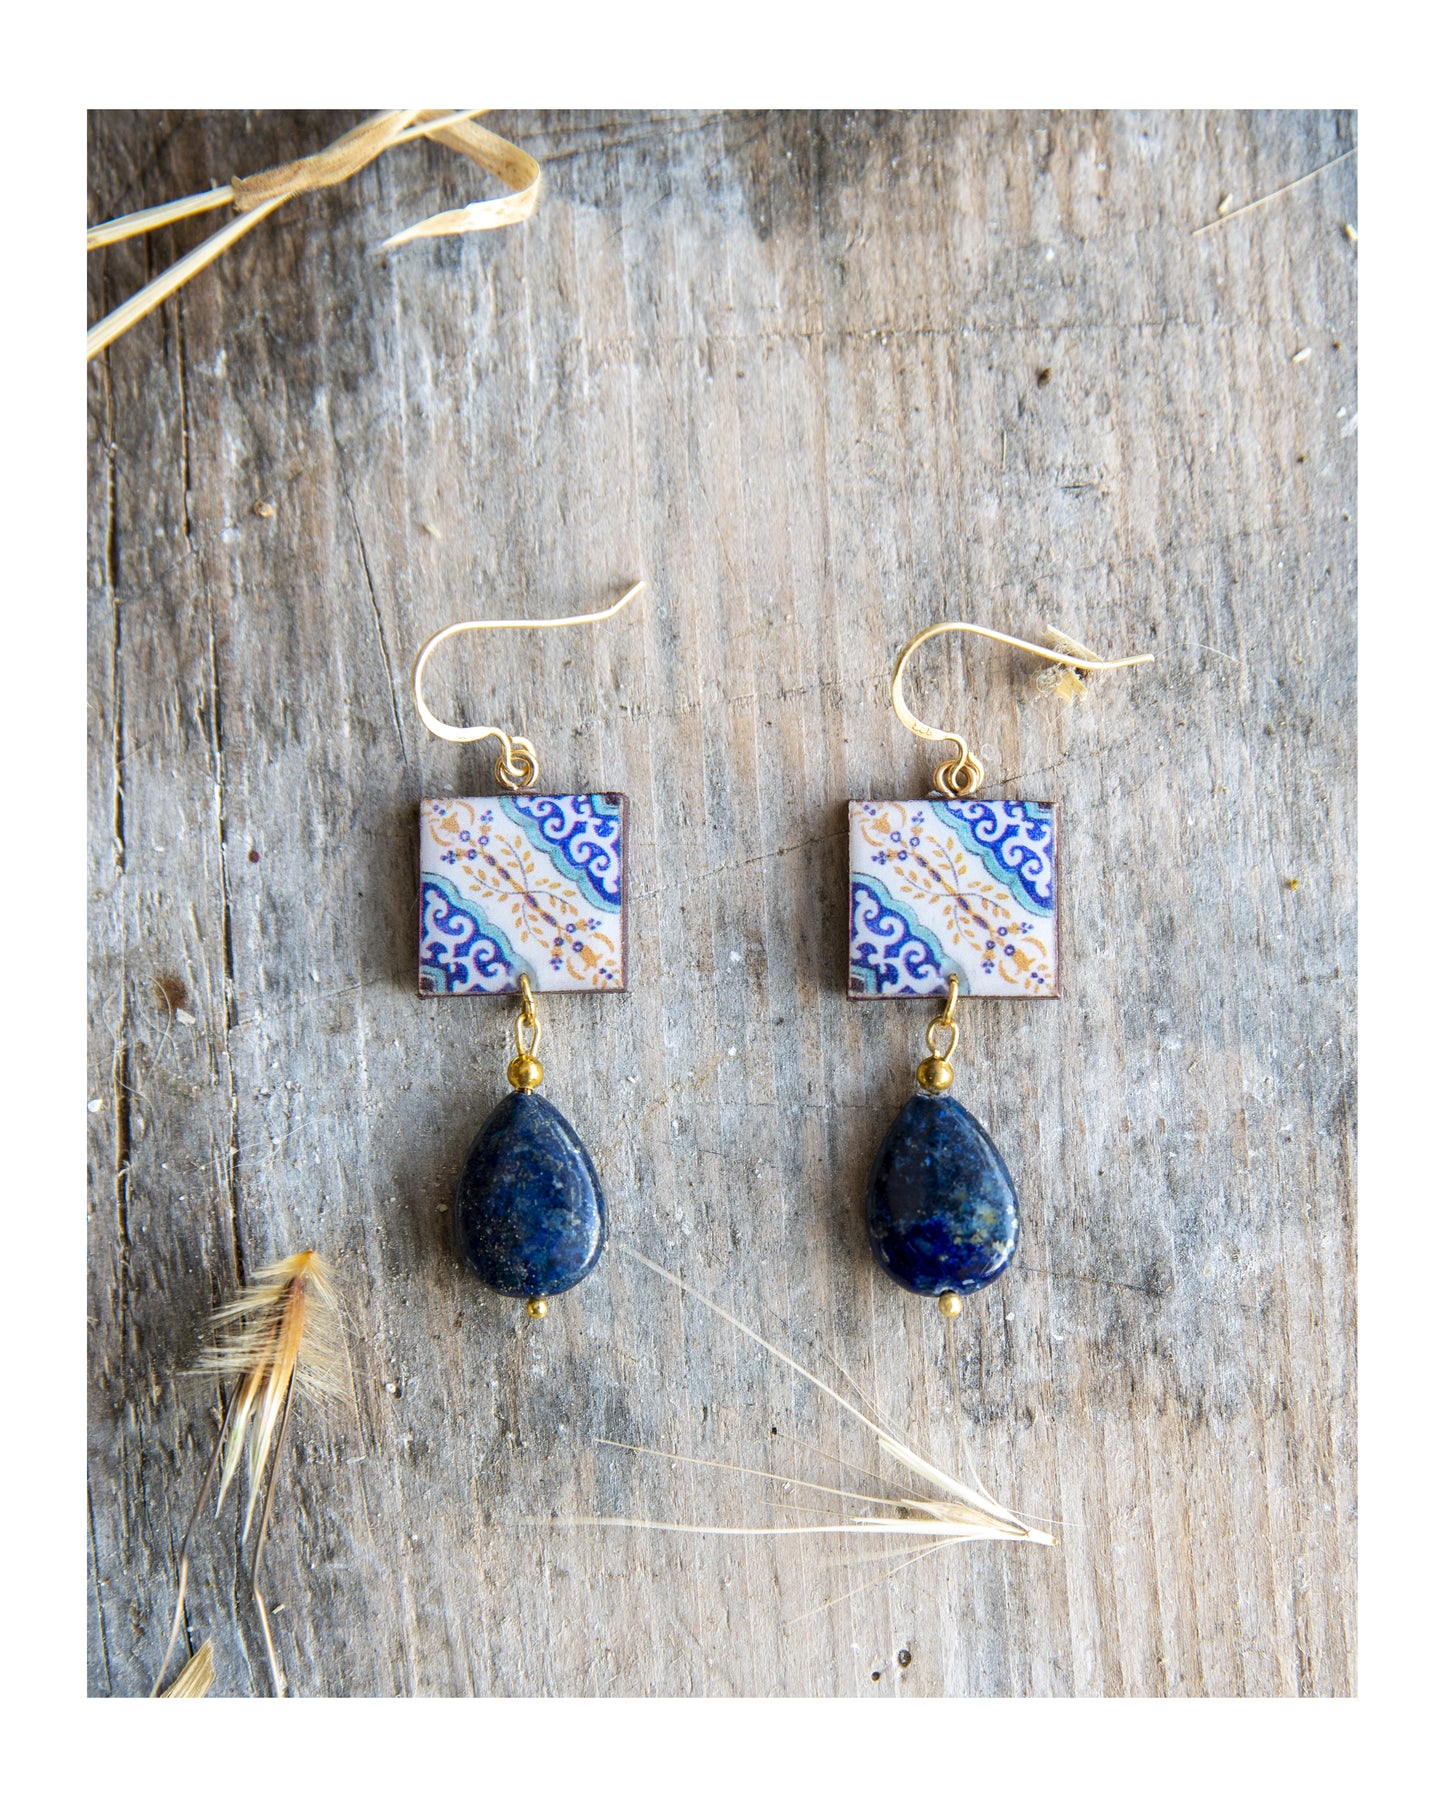 Earrings with lapis lazuli stone